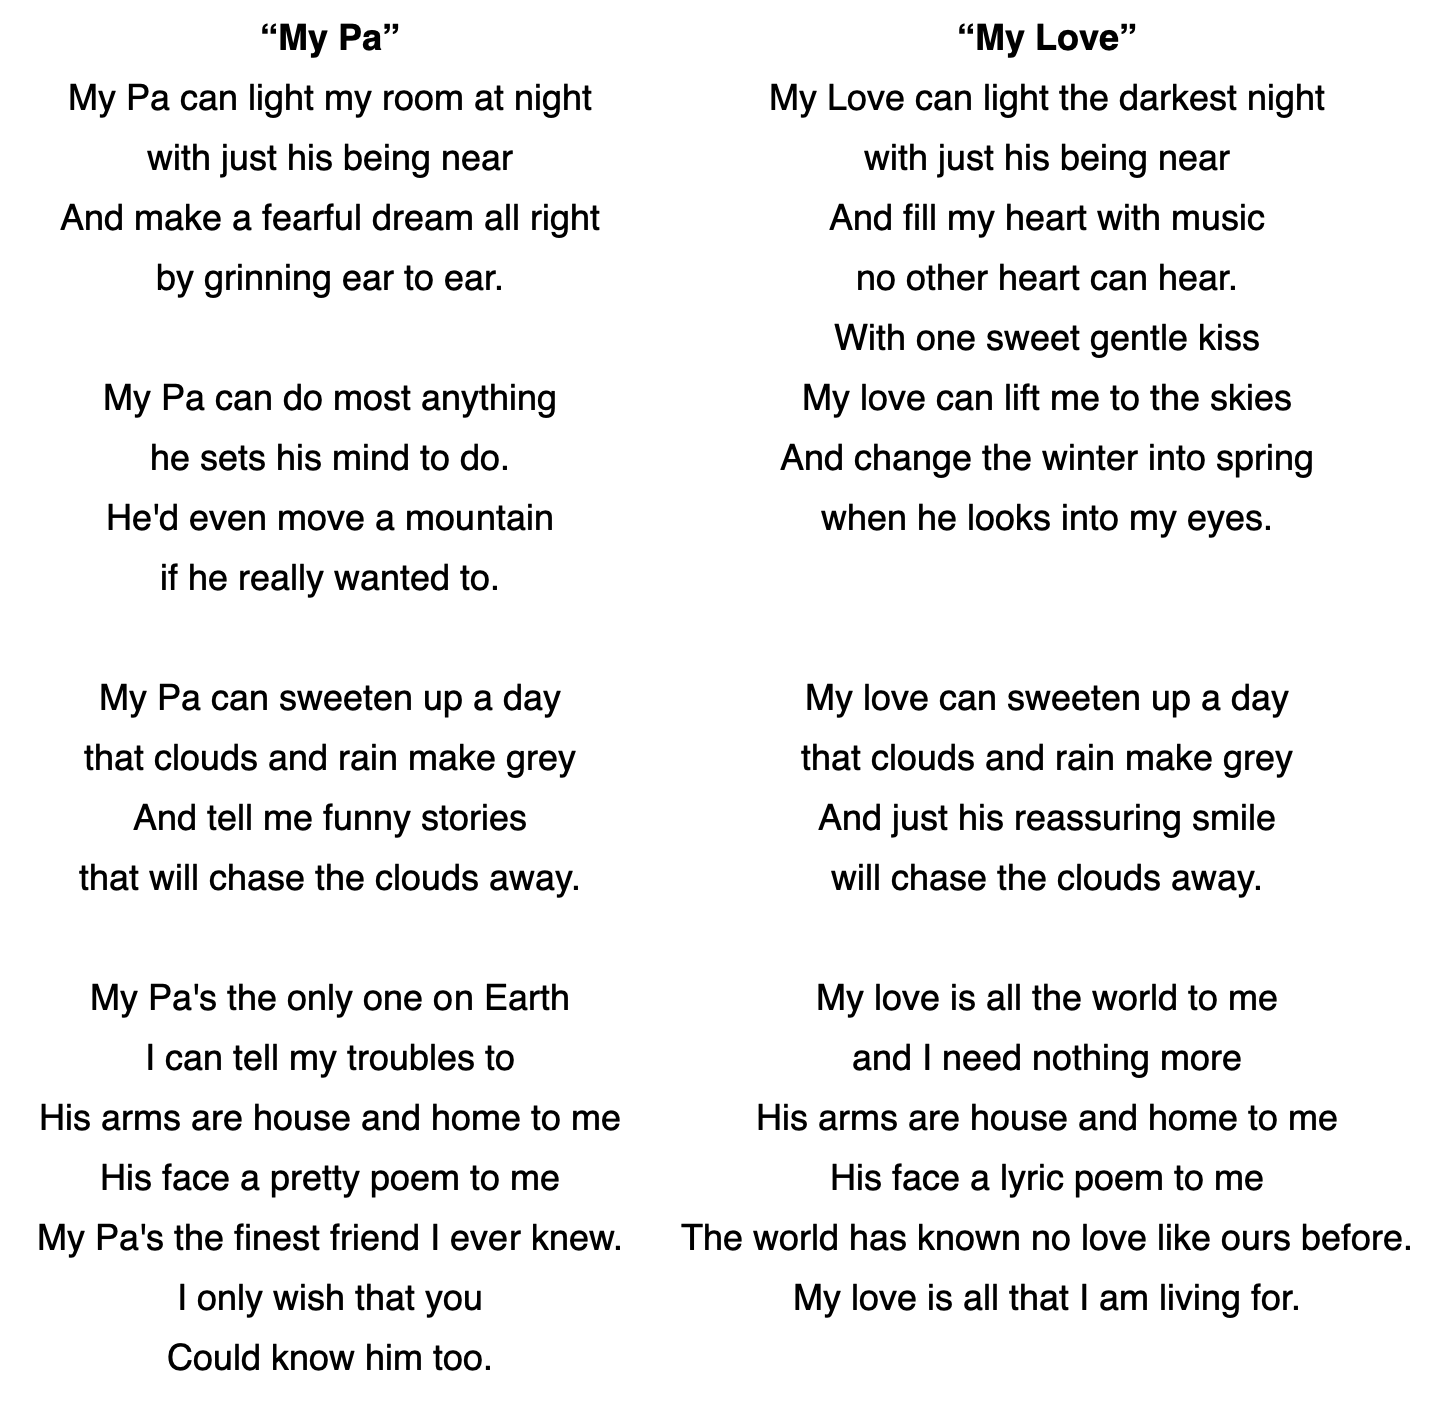 Comparison of lyrics to My Pa versus My Love